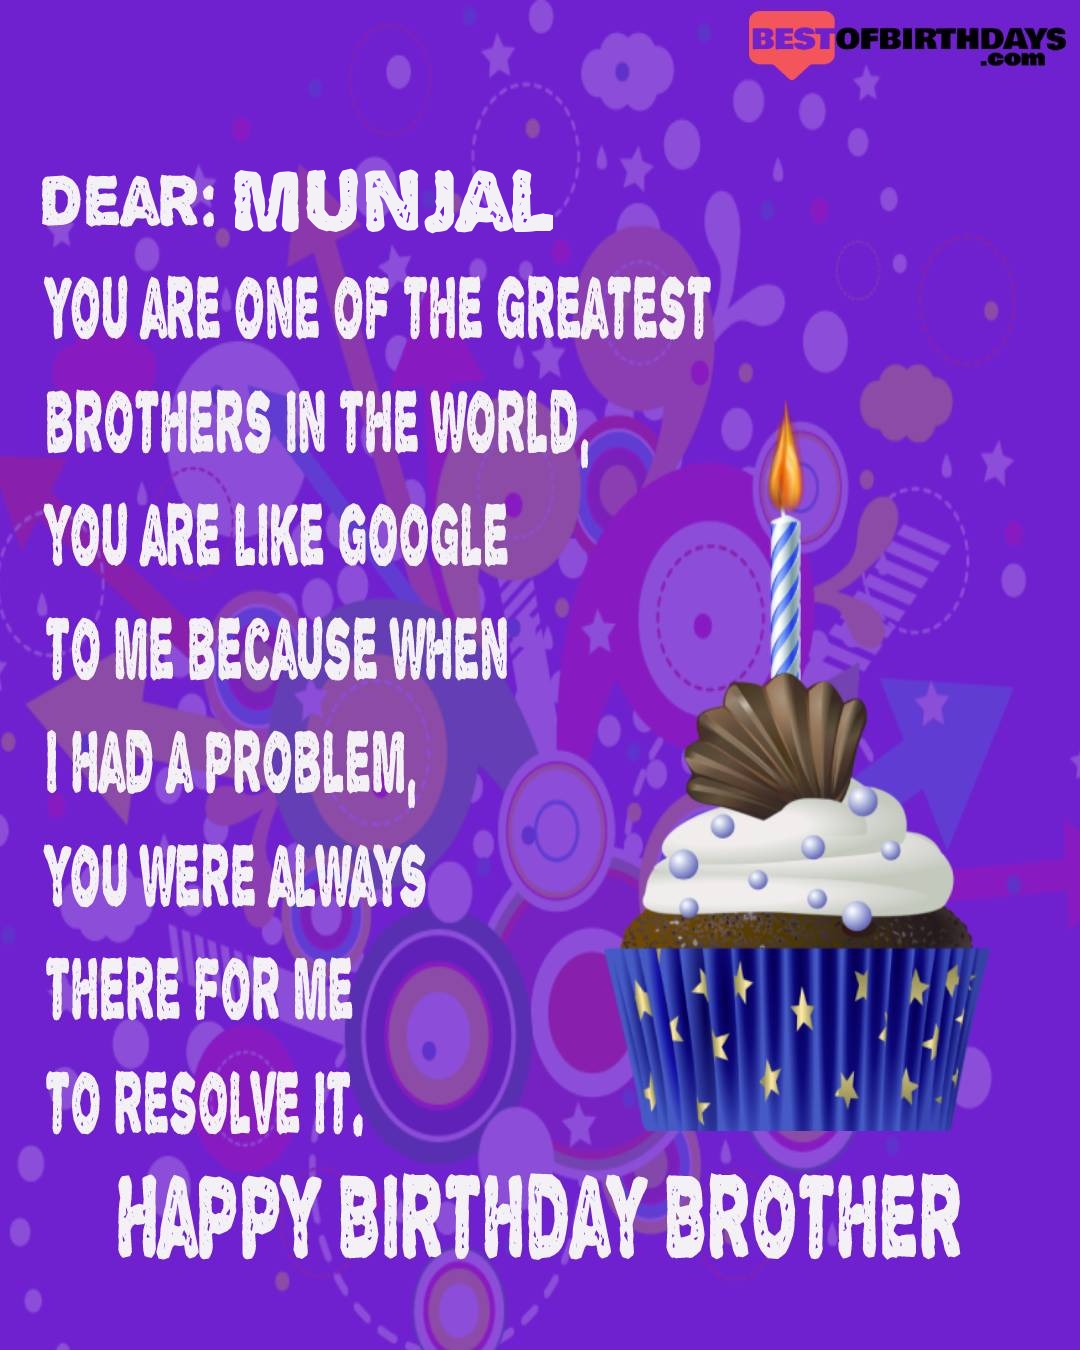 Happy birthday munjal bhai brother bro